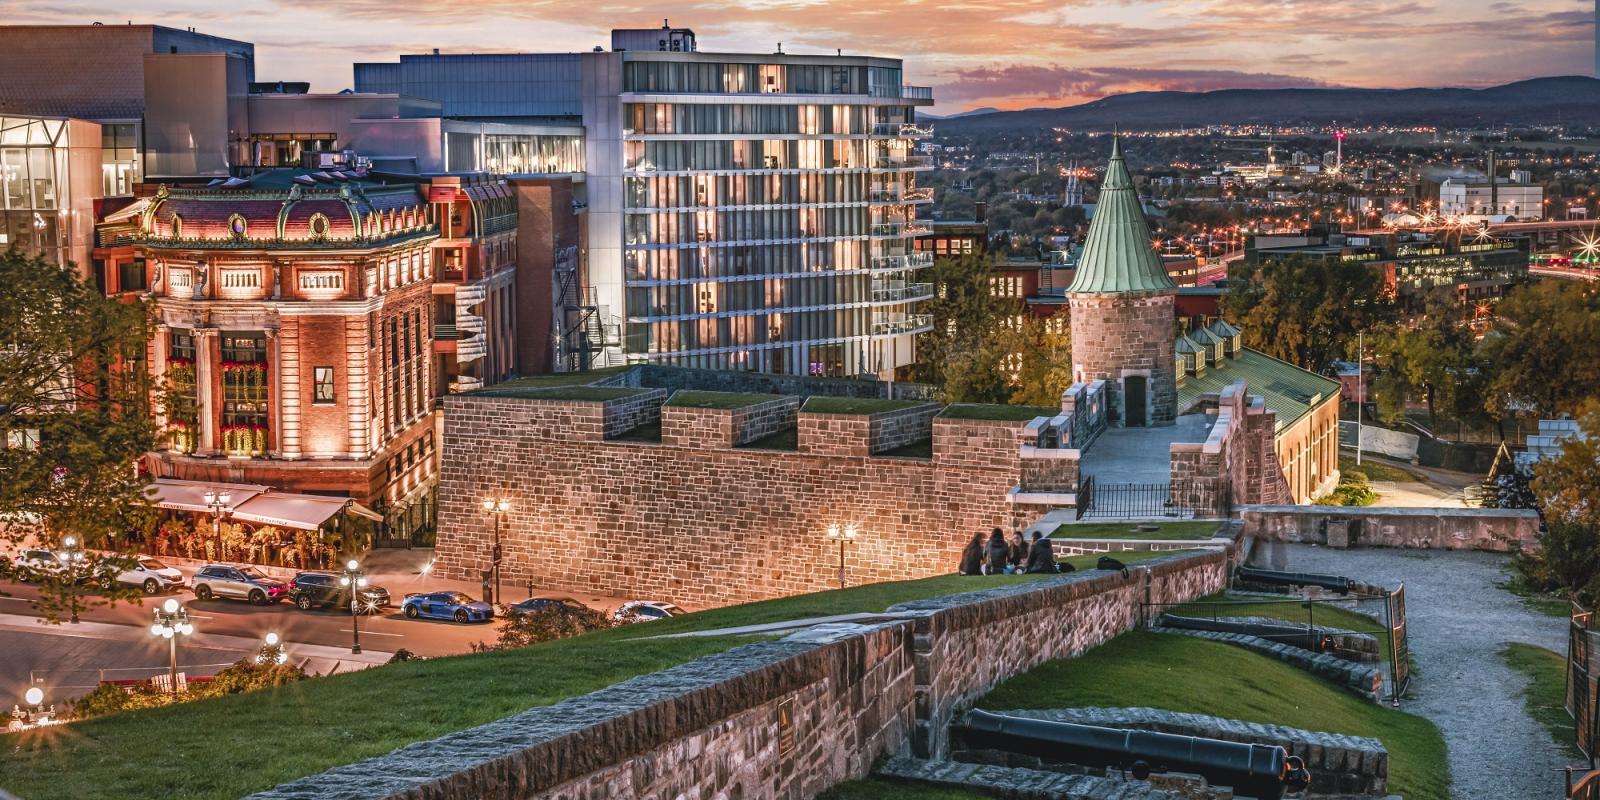 View of the Québec City's walls